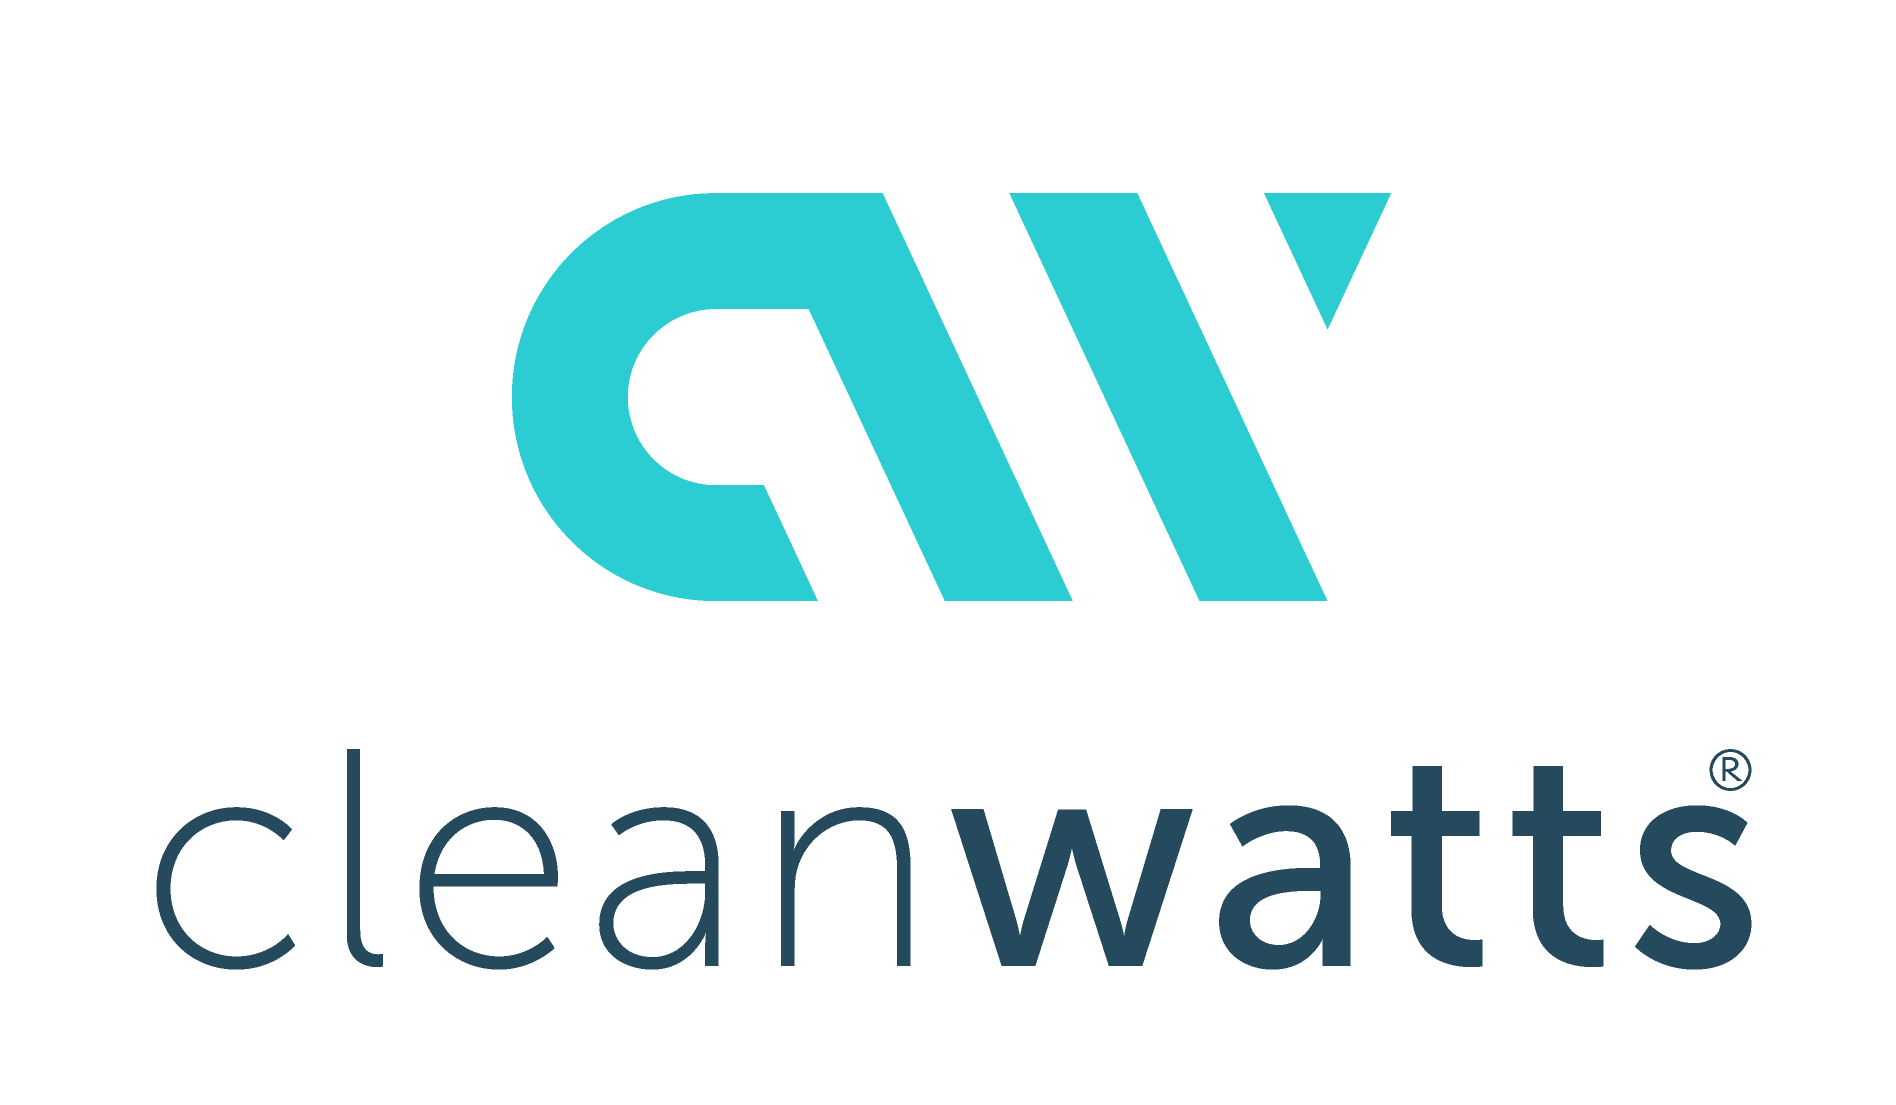 Cleanwatts logo horizontal